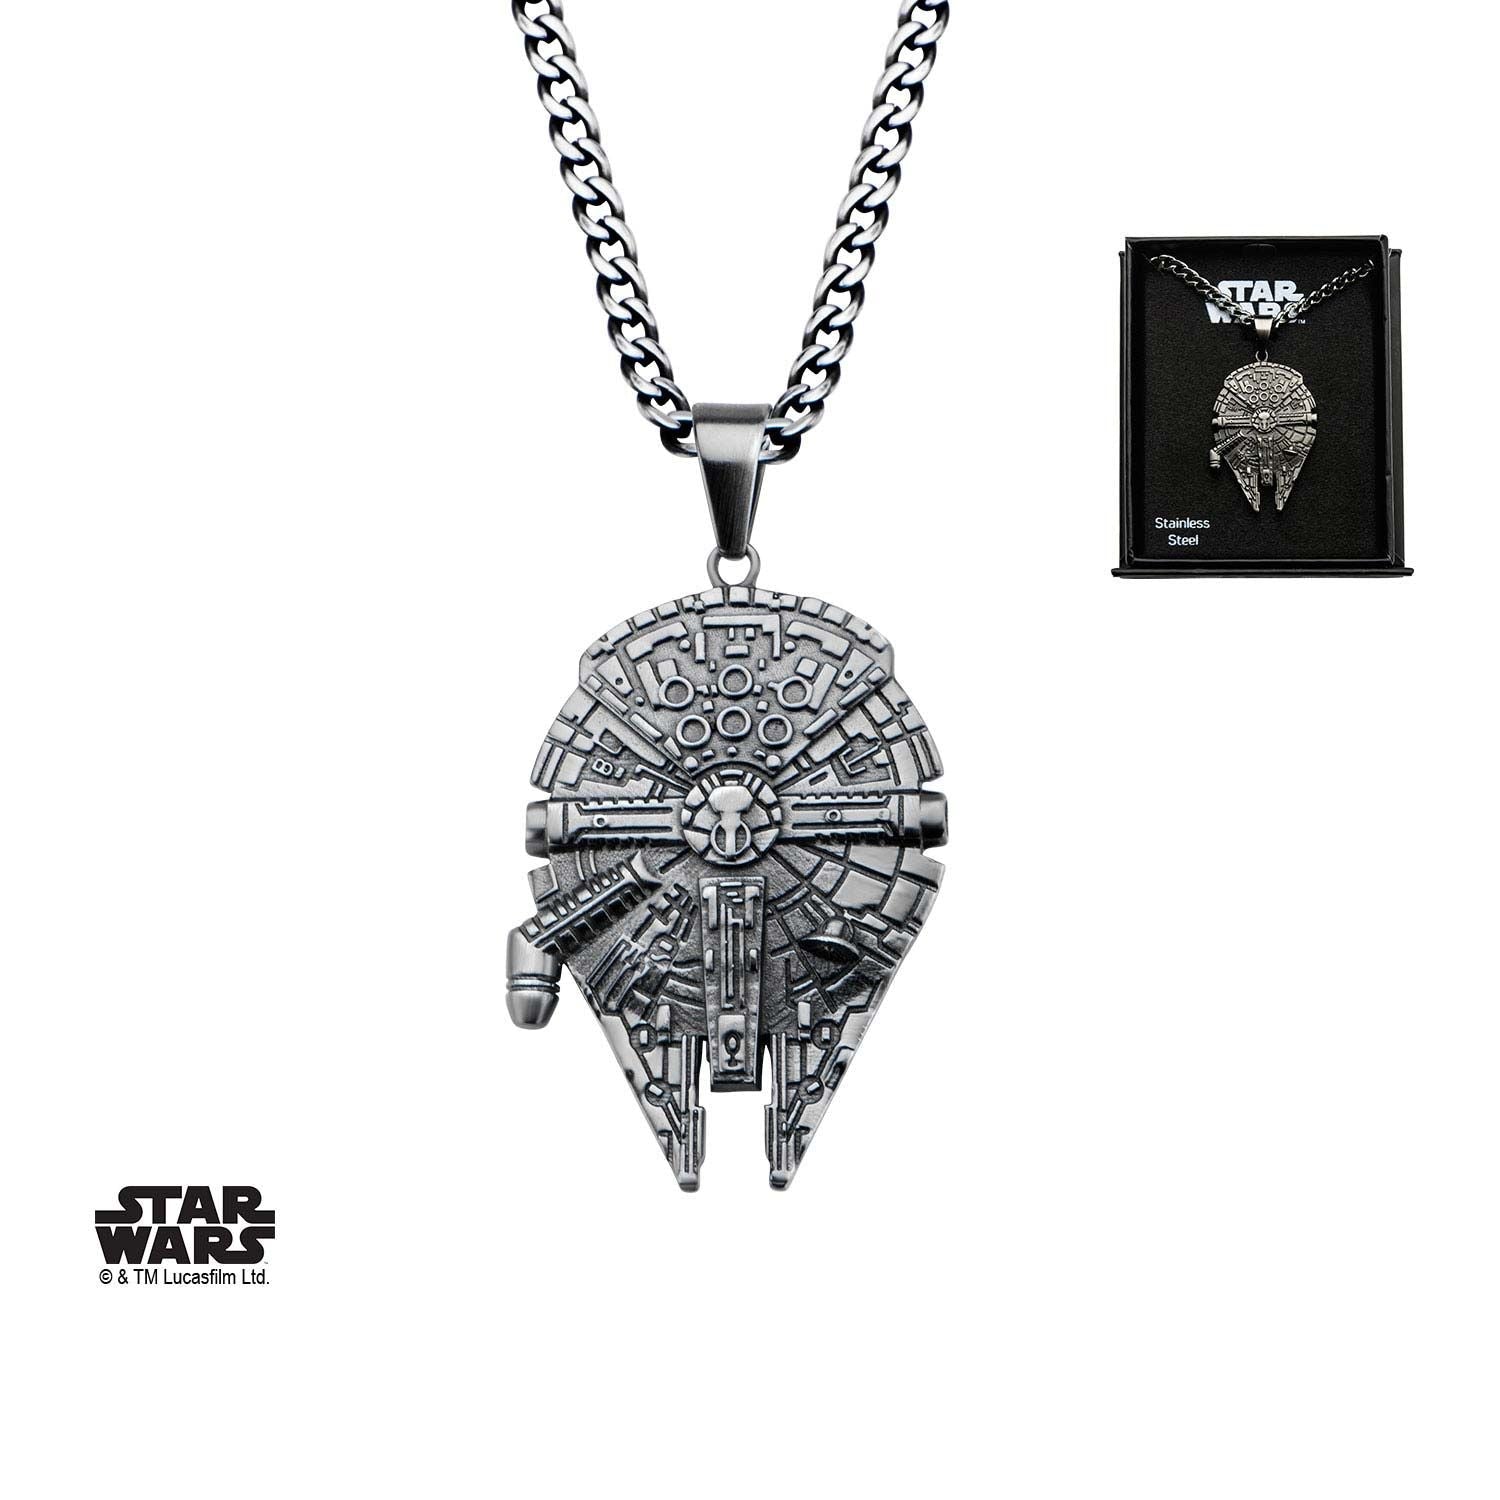 STAR WARS Star Wars Black Plated Millennium Falcon Pendant Necklace -Rebel Bod-RebelBod